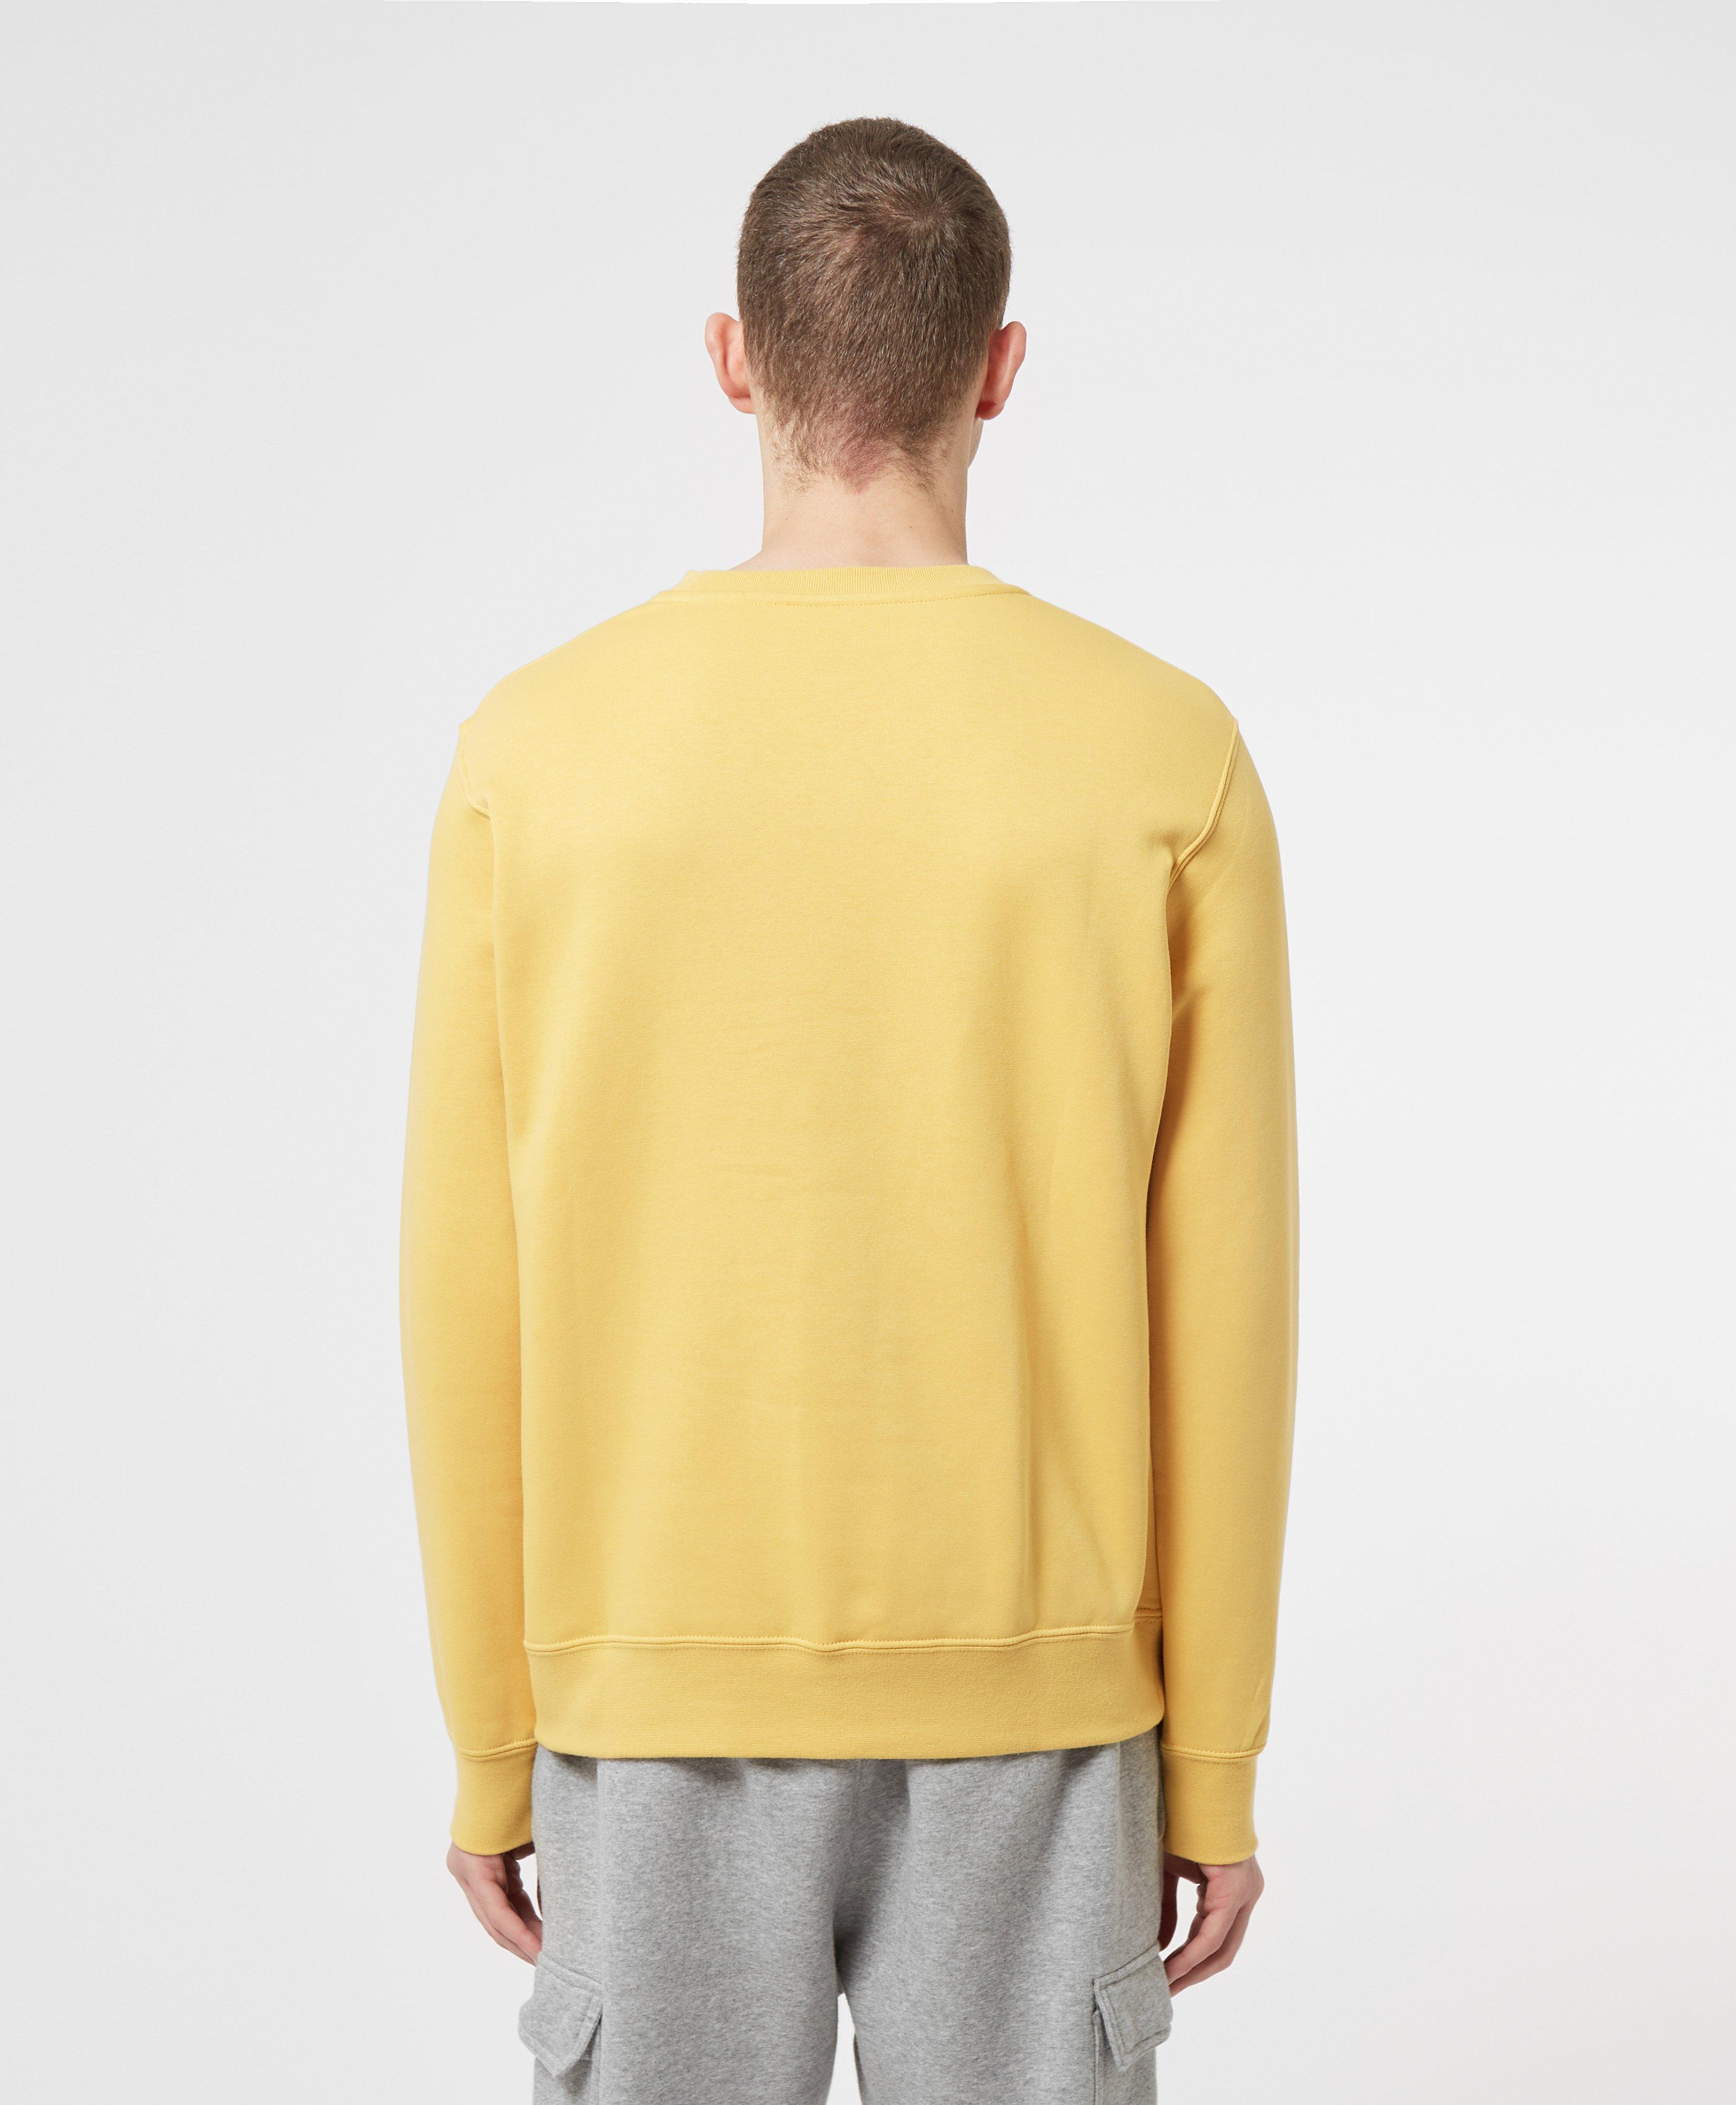 Nike Club Crew Sweatshirt in Yellow for Men - Lyst